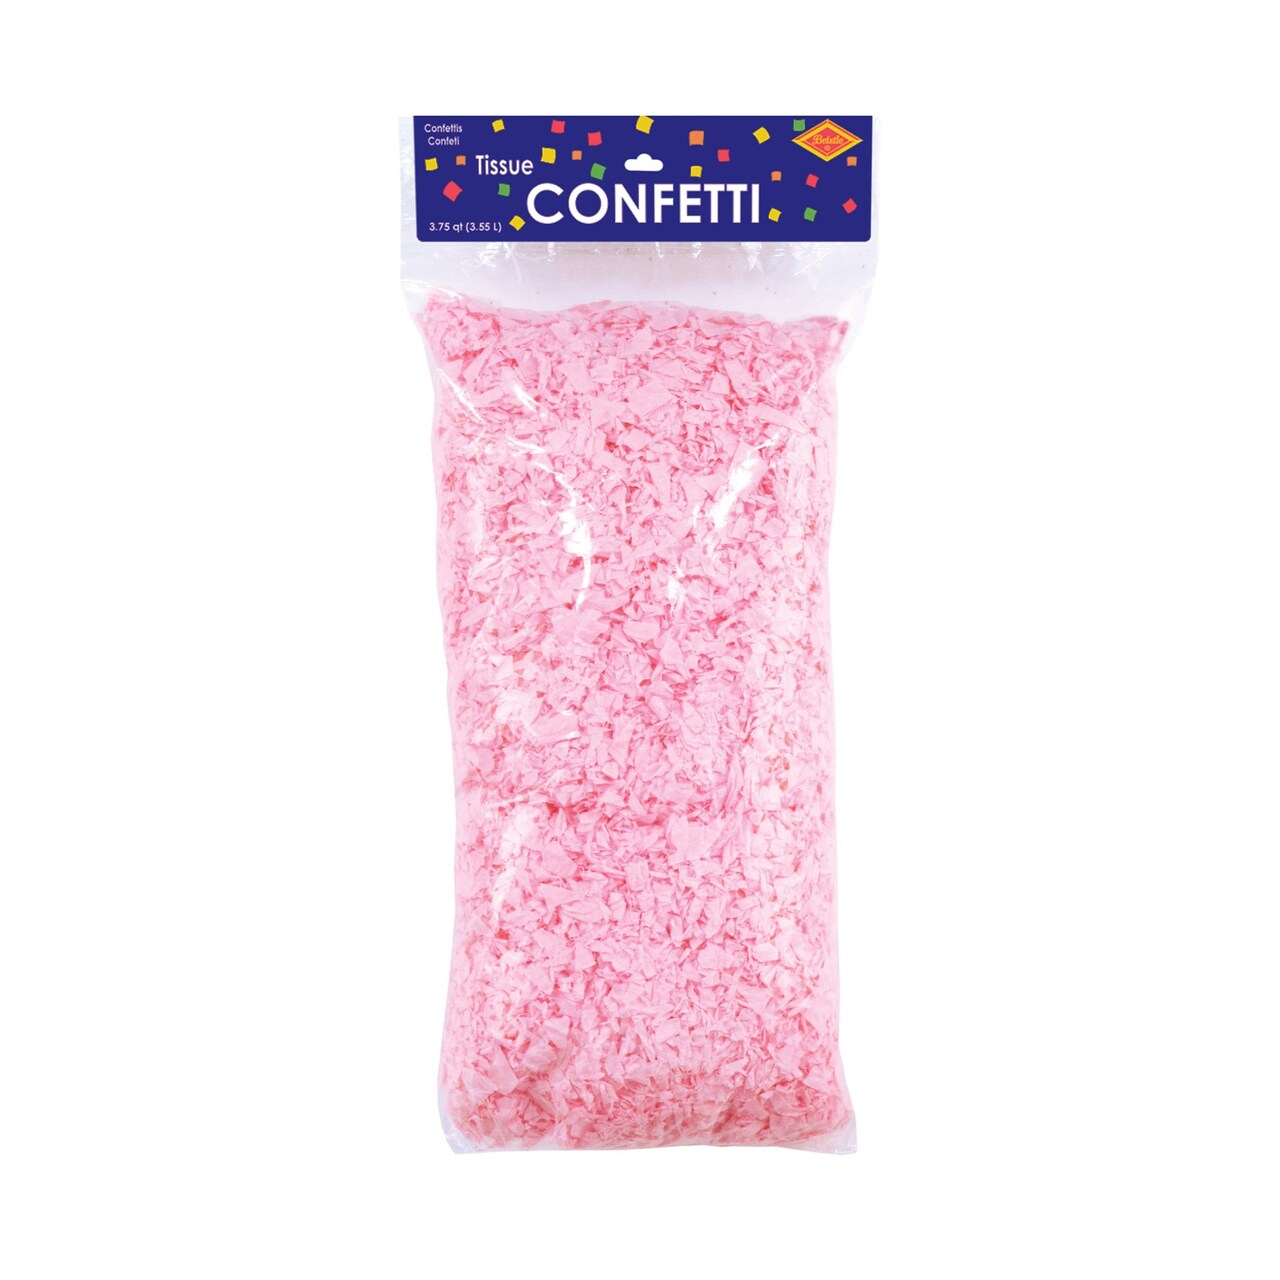 Tissue Confetti, (Pack of 6)